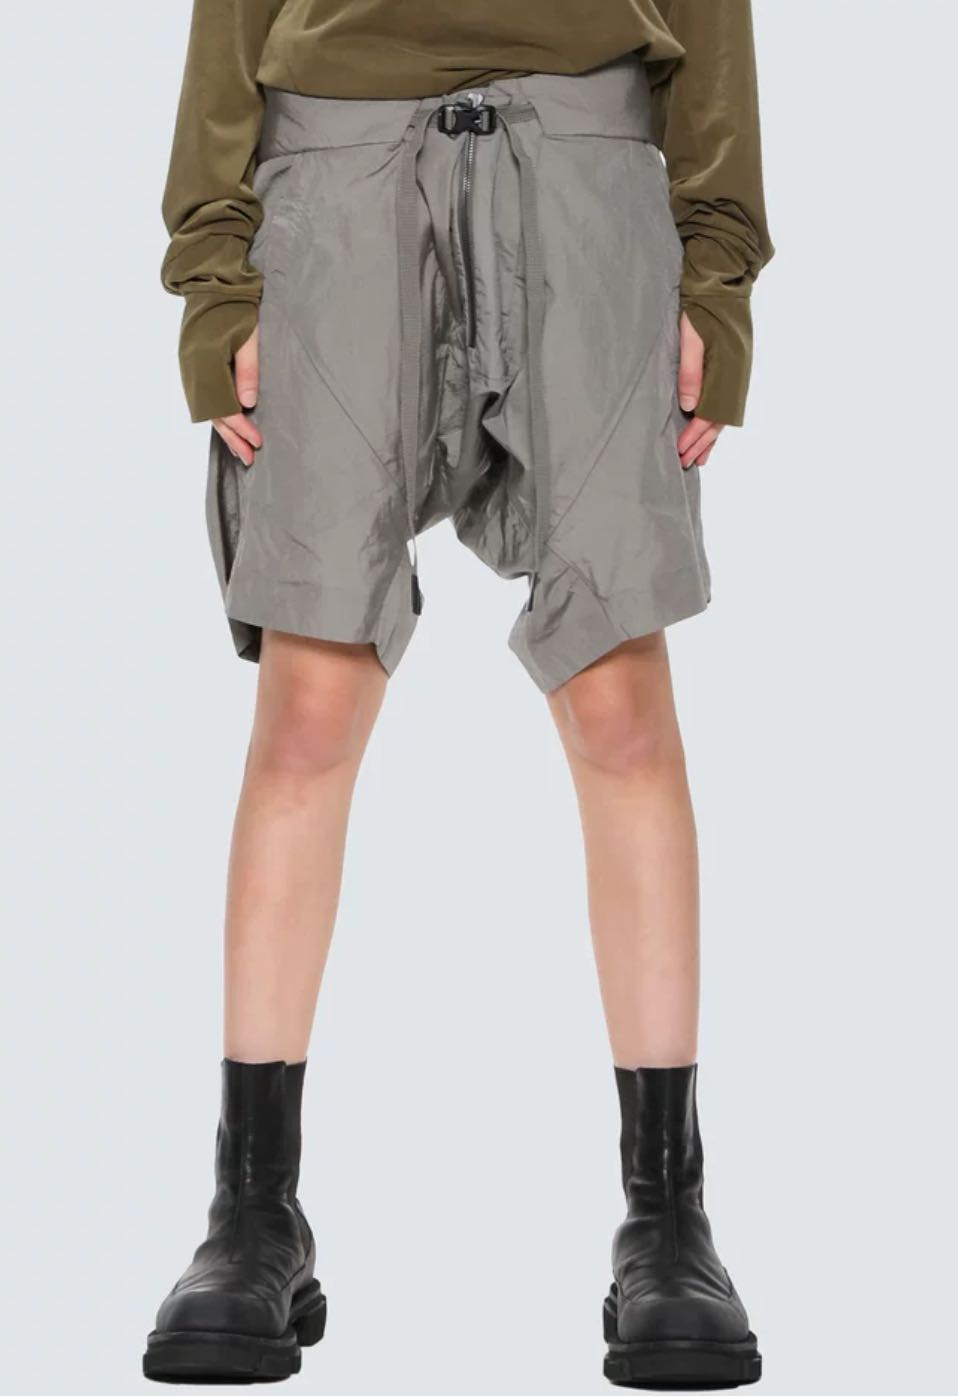 LPU/diagonal zipper split seam shorts/SG size S - 1